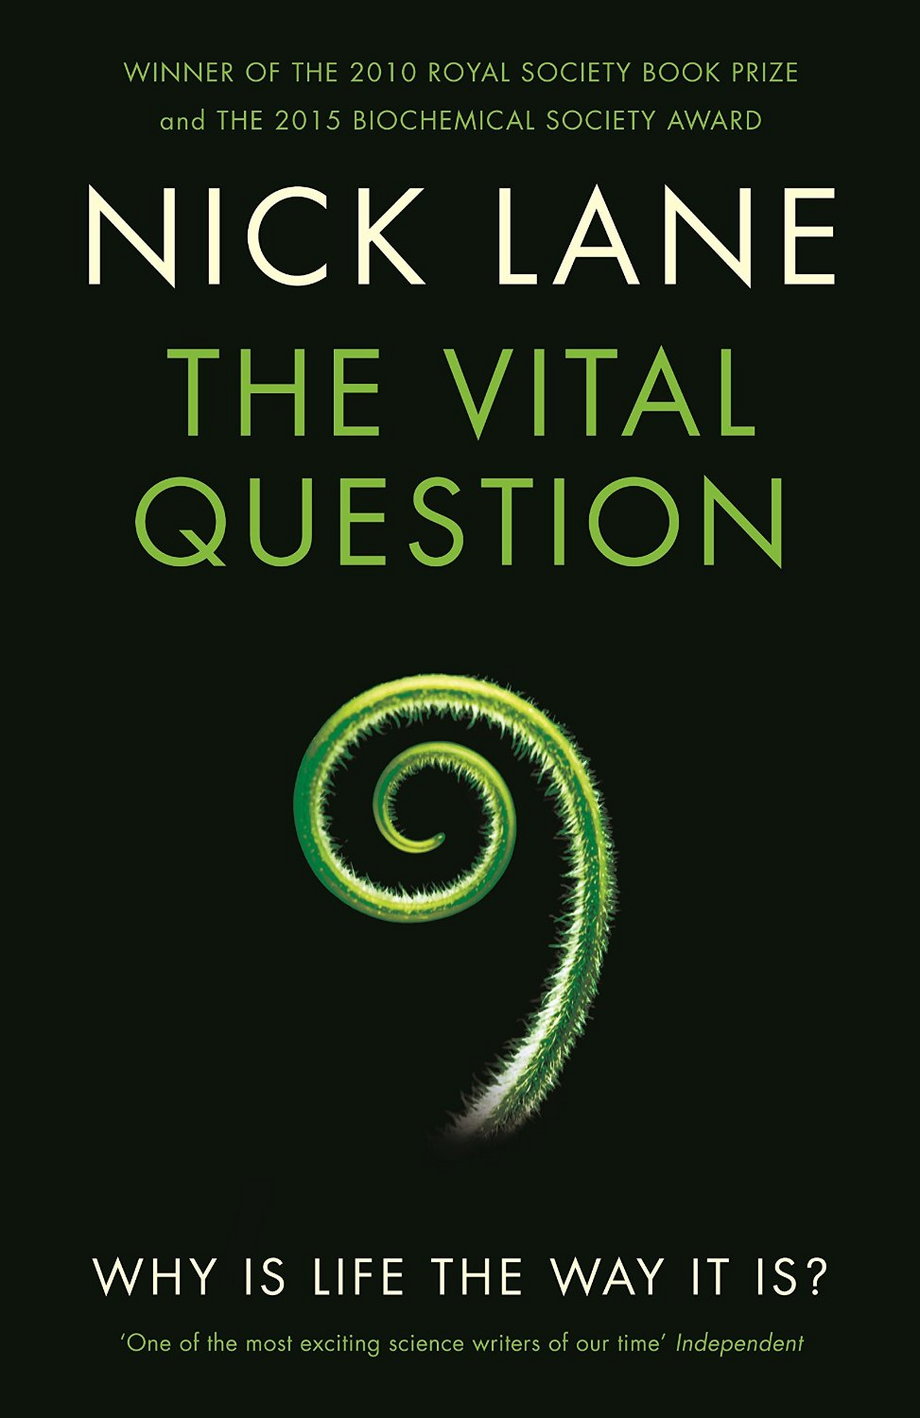 "The Vital Question" Nick Lane